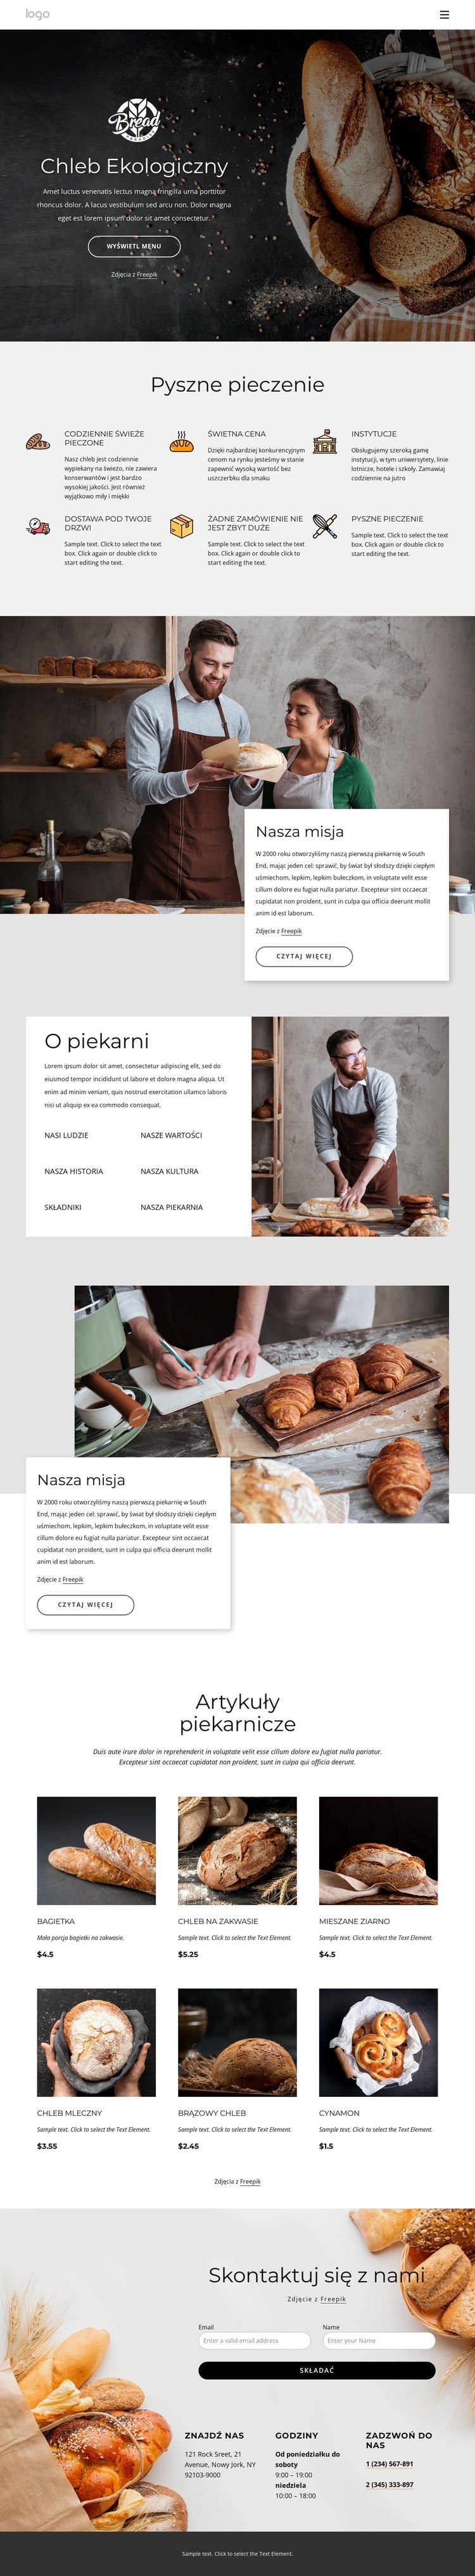 Bajgle, bułki, bułki, herbatniki i bochenki chleba Szablon HTML5